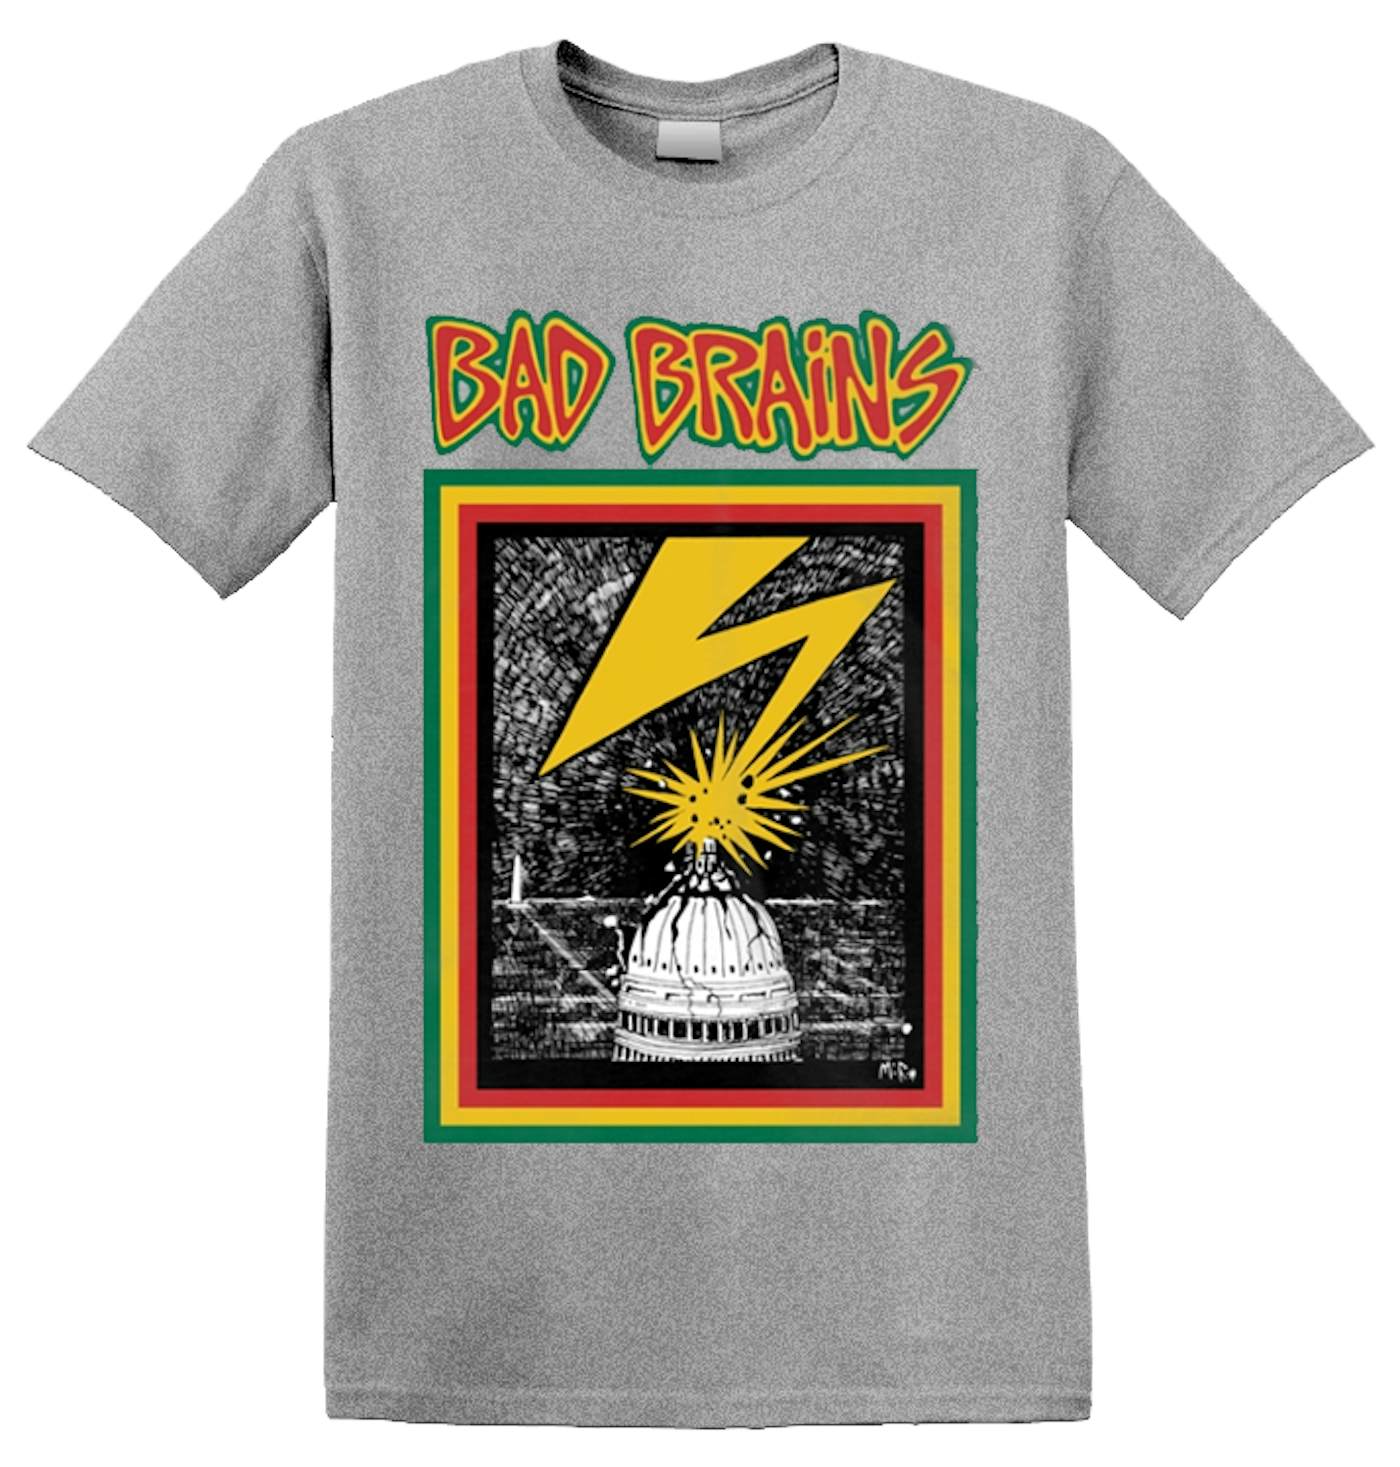 Bad Brains T-Shirt - Bad Brains